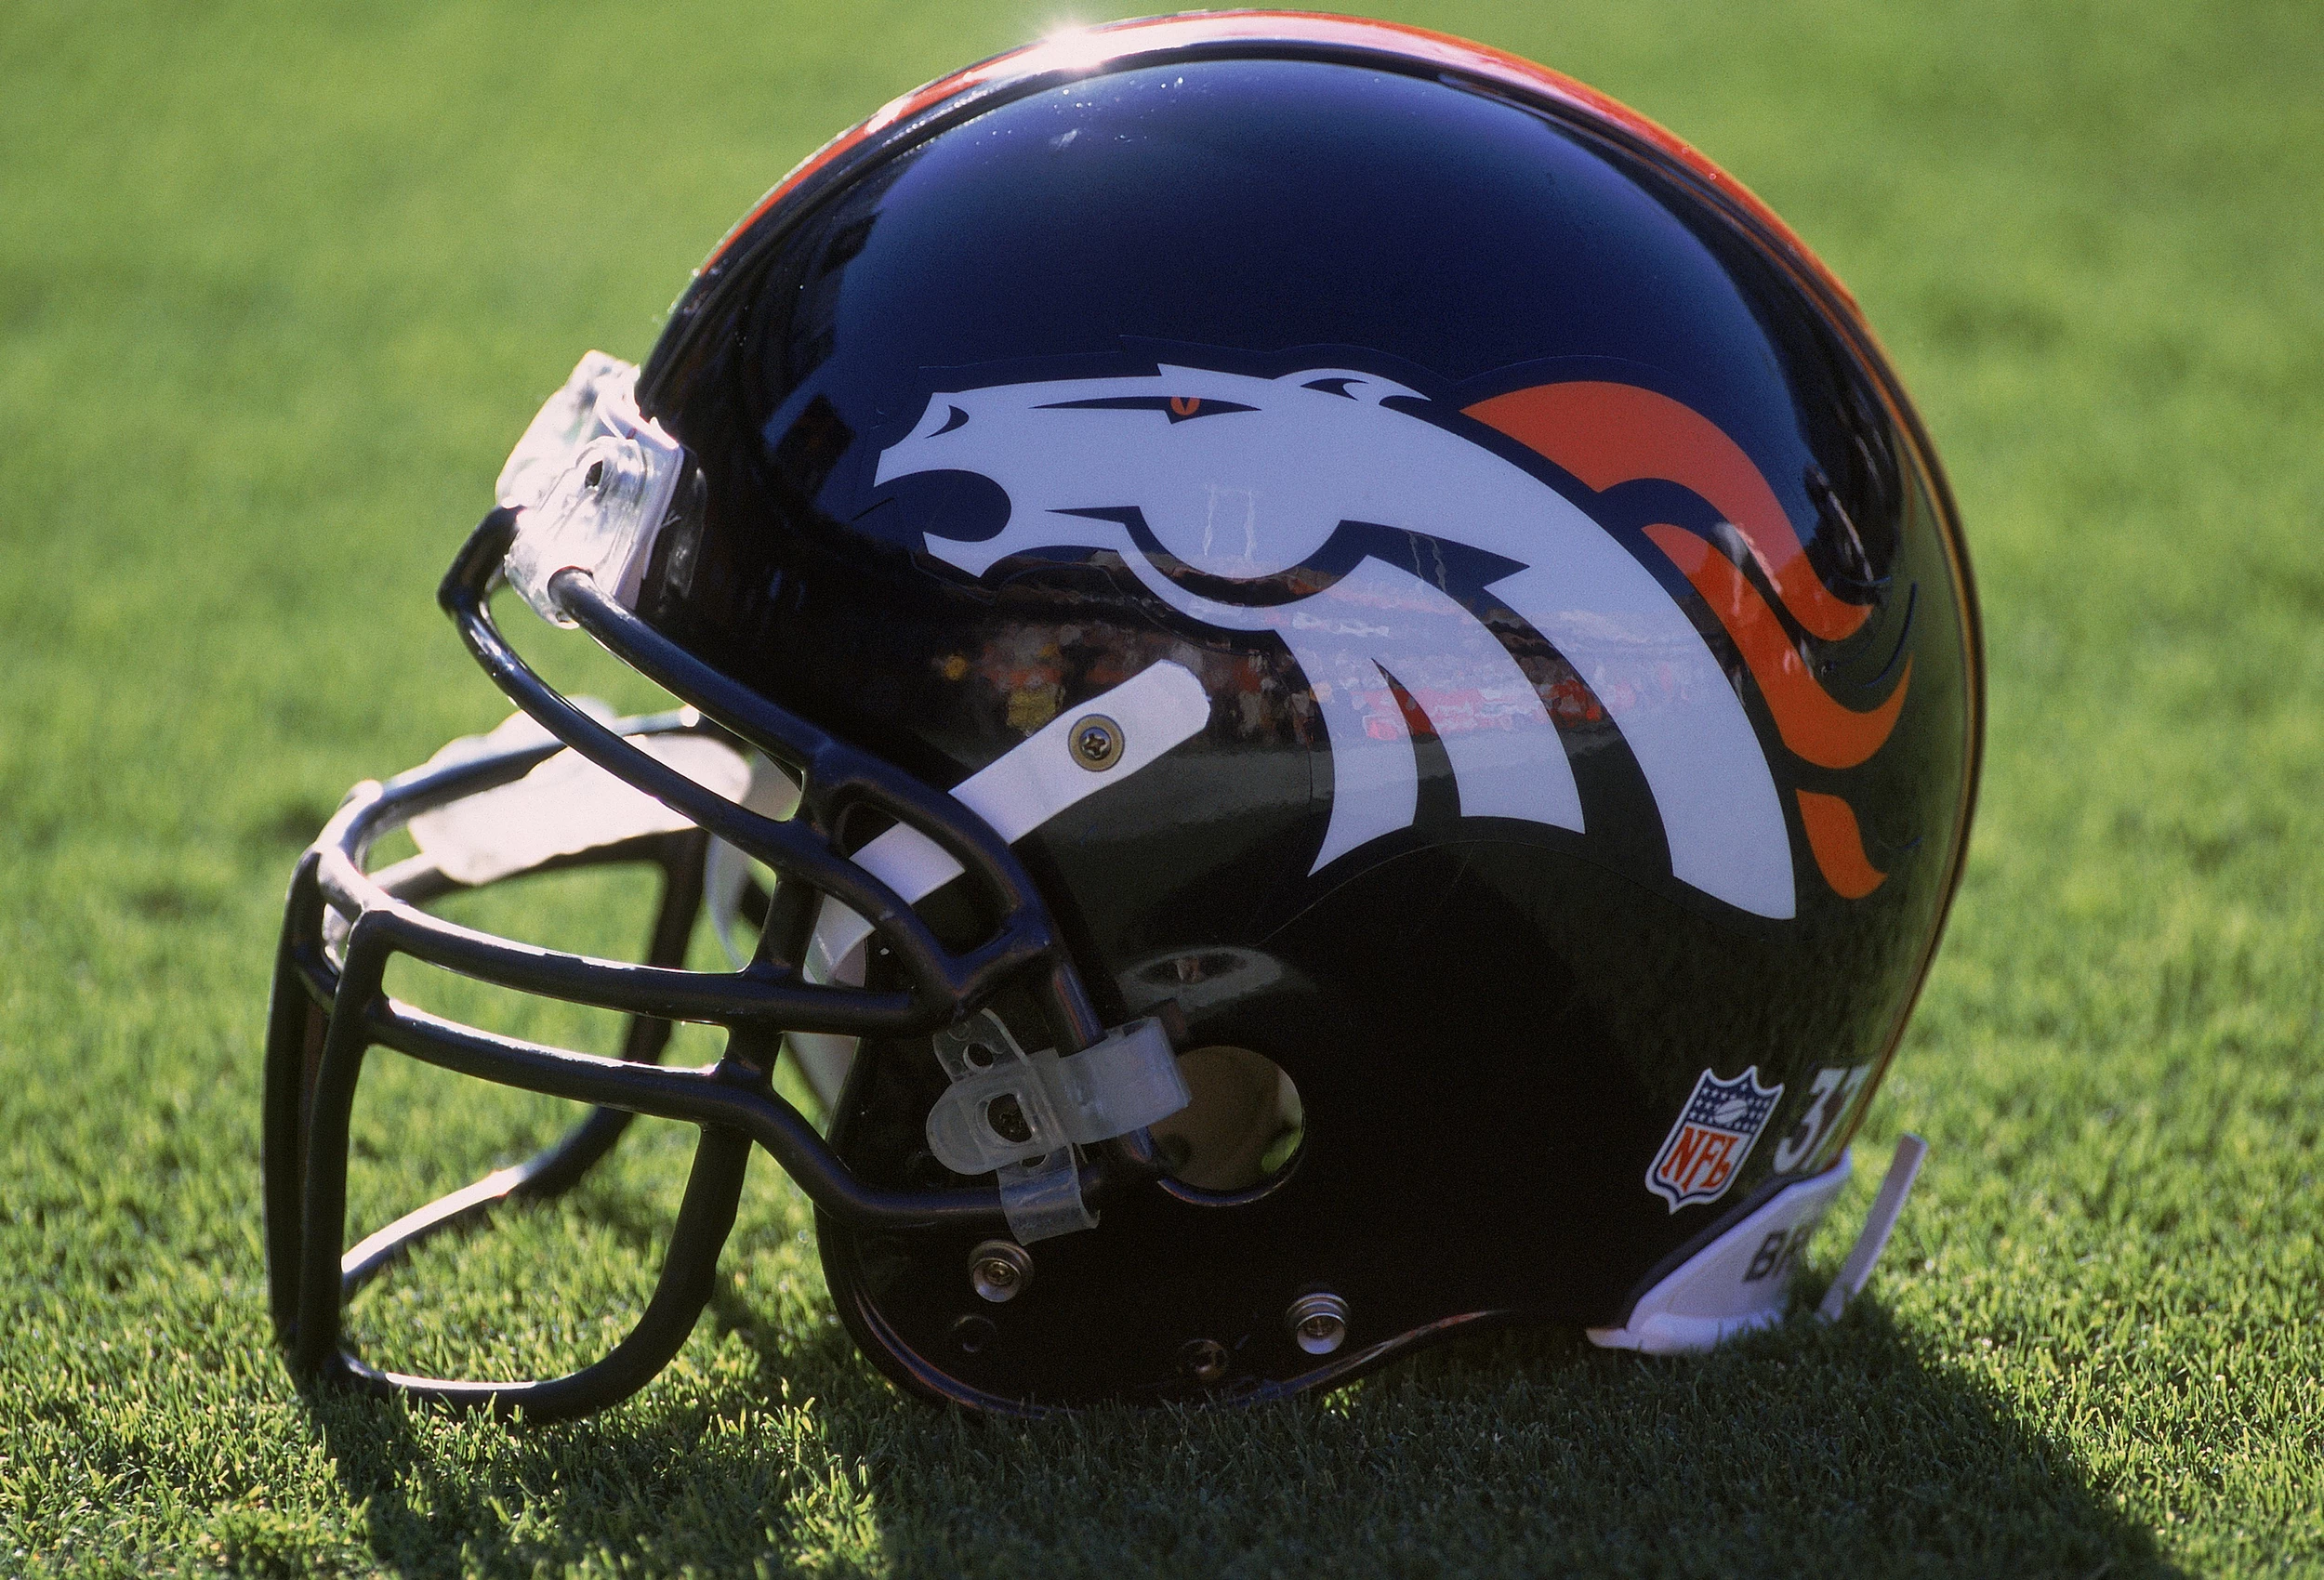 Walmart heir Rob Walton officially buys Denver Broncos football